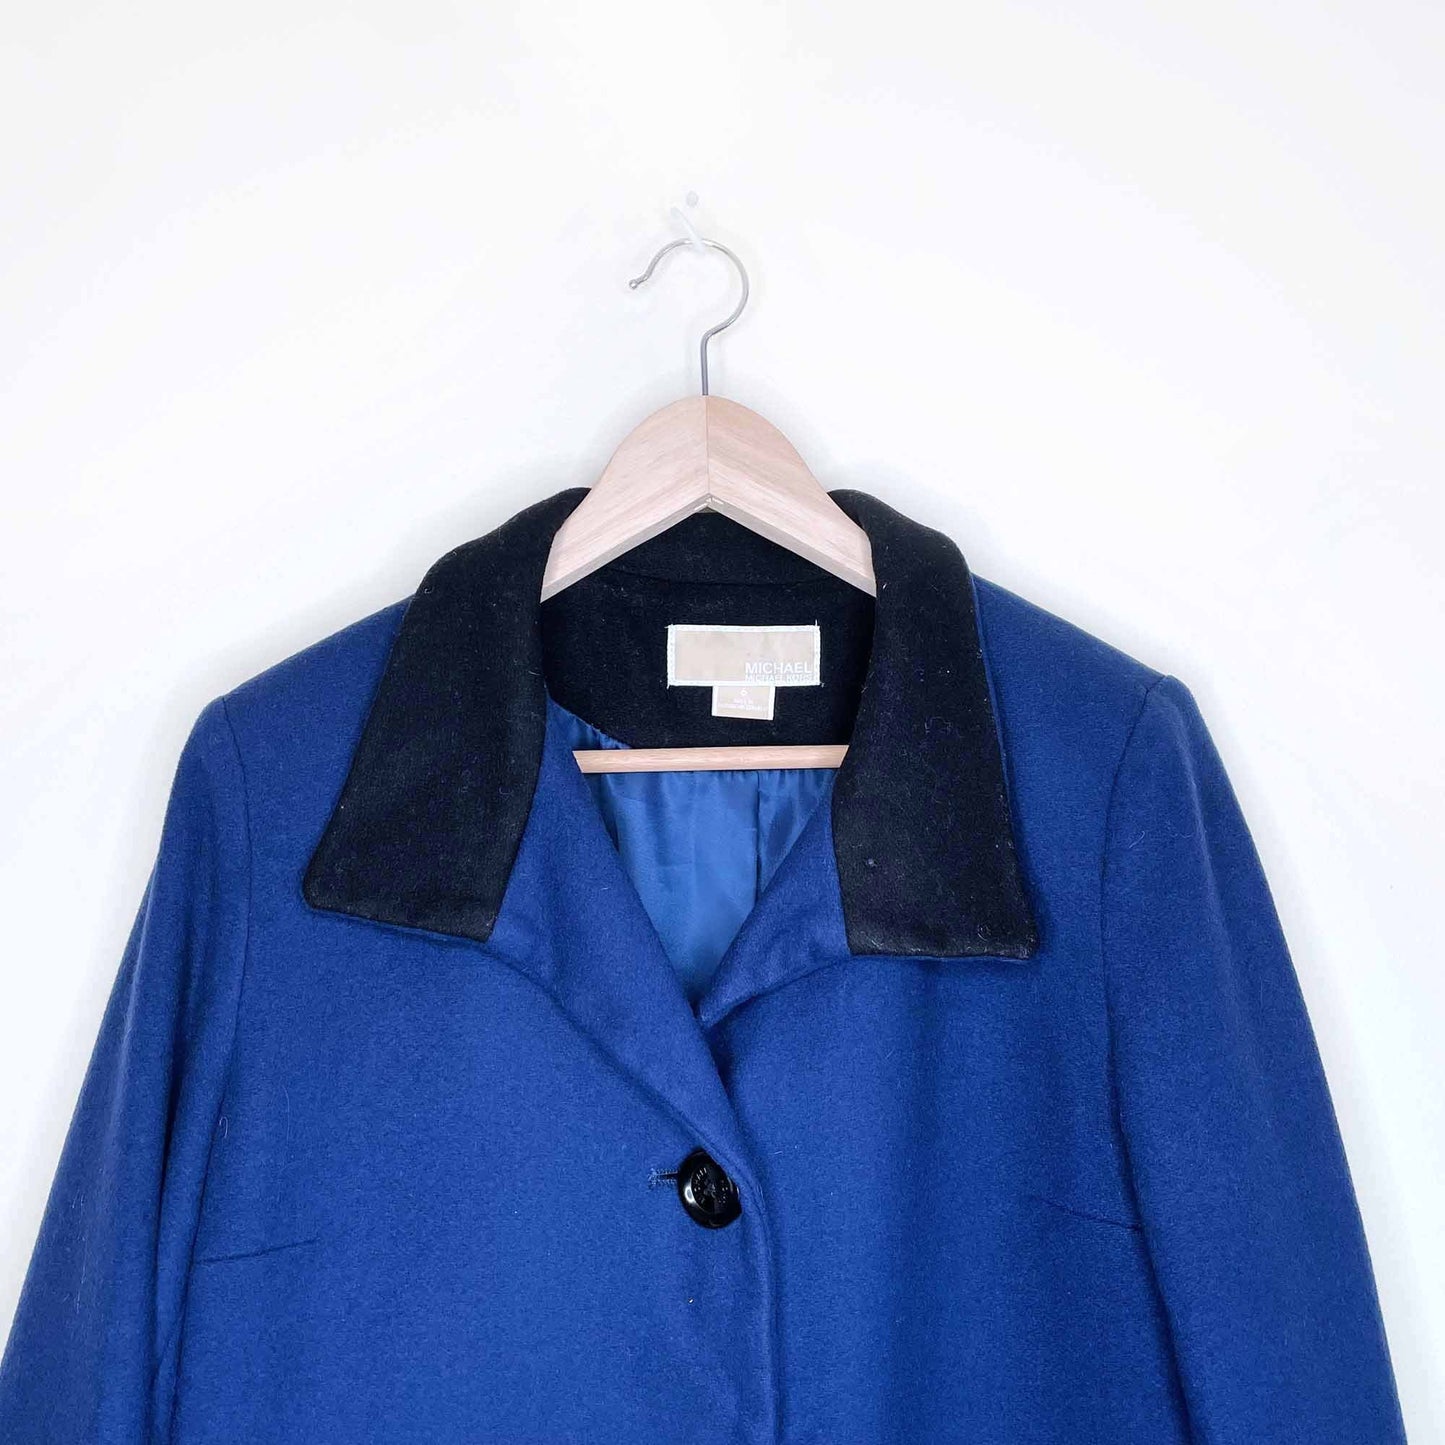 kors michael kors colour block wool-cashmere blend jacket - size 6